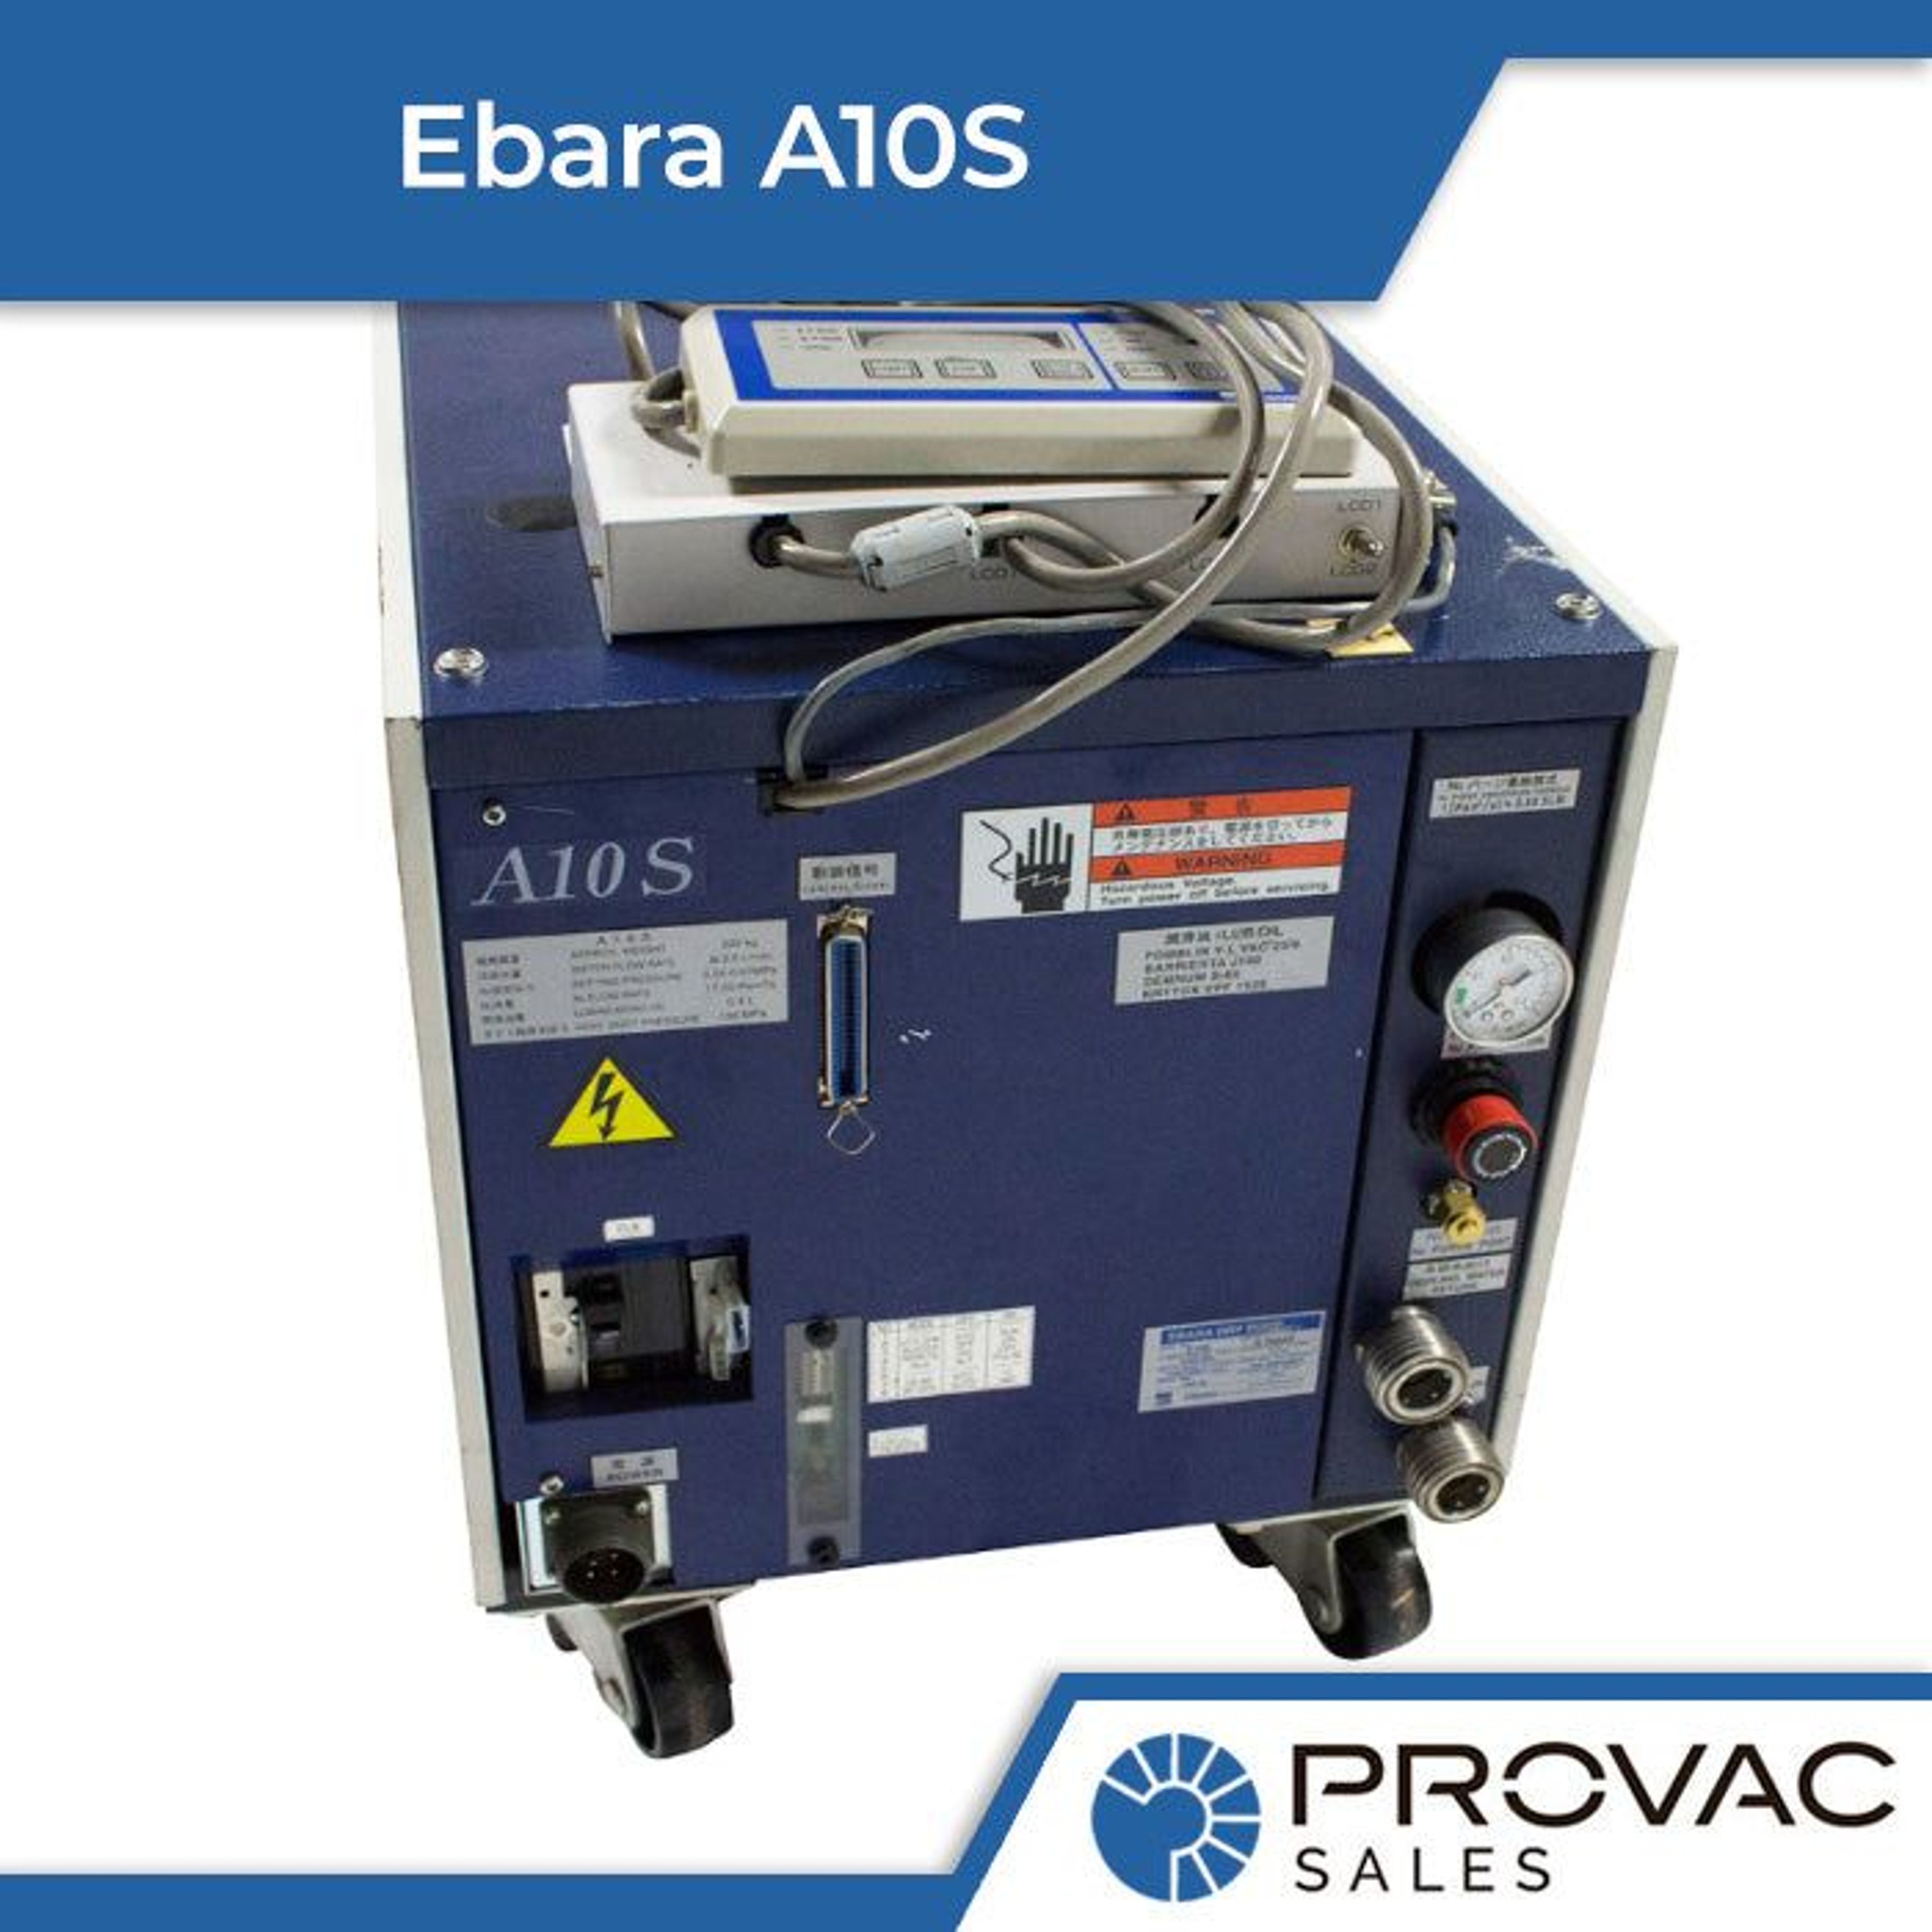 Product Spotlight: Ebara A10S Dry Pump Background